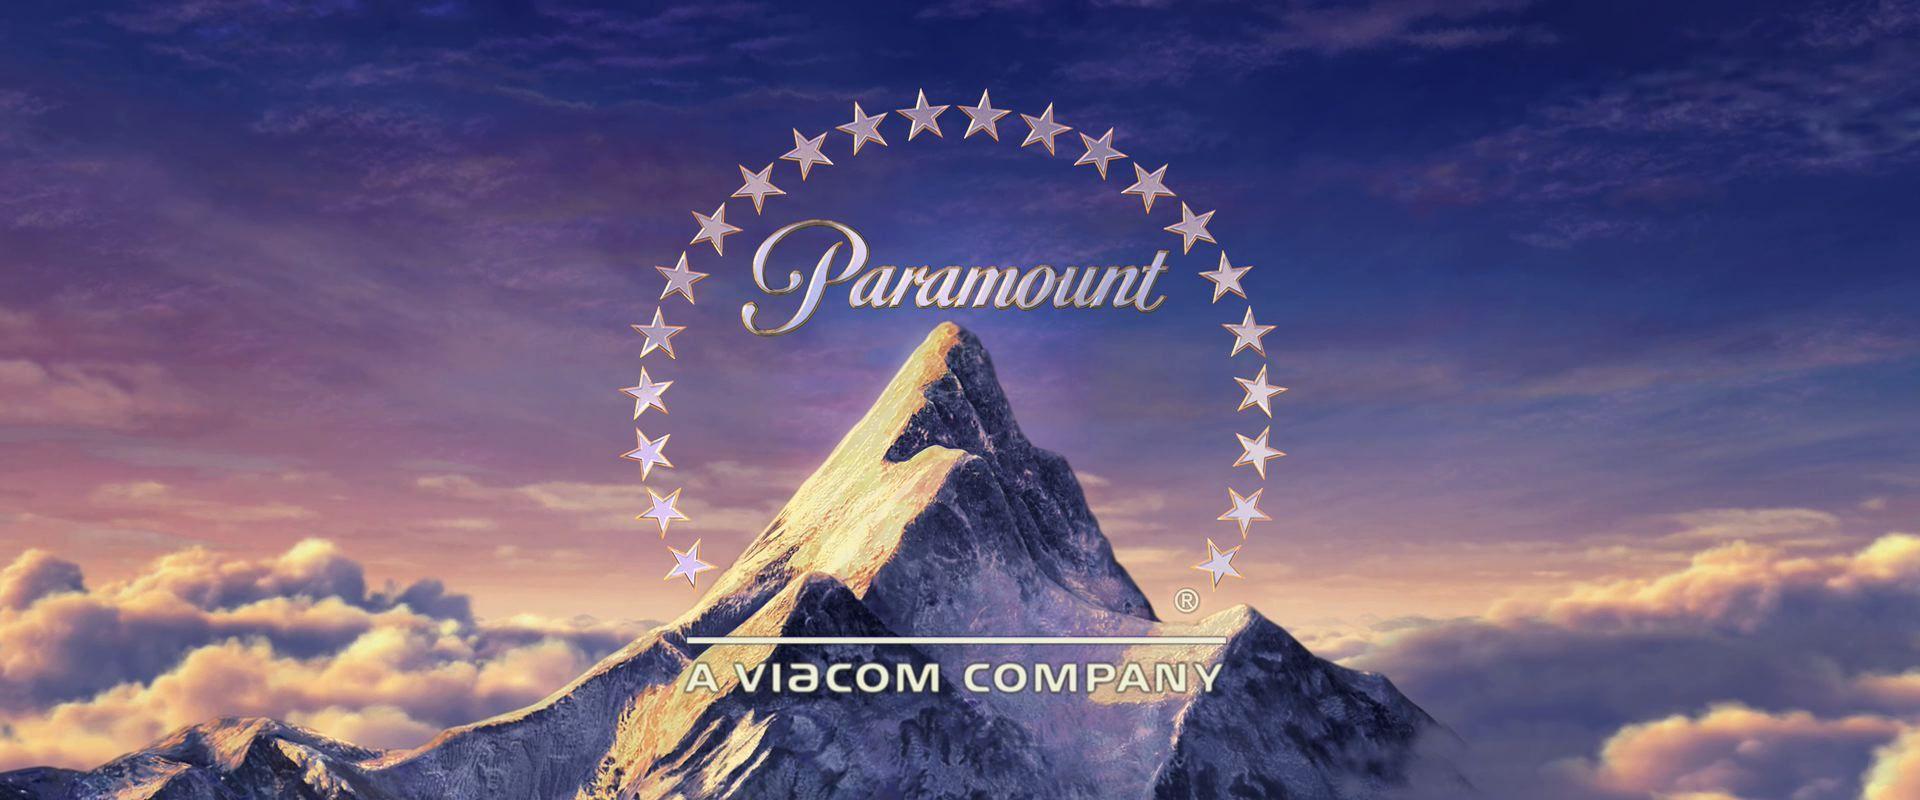 Best 51+ Paramount Studios Wallpapers on HipWallpapers